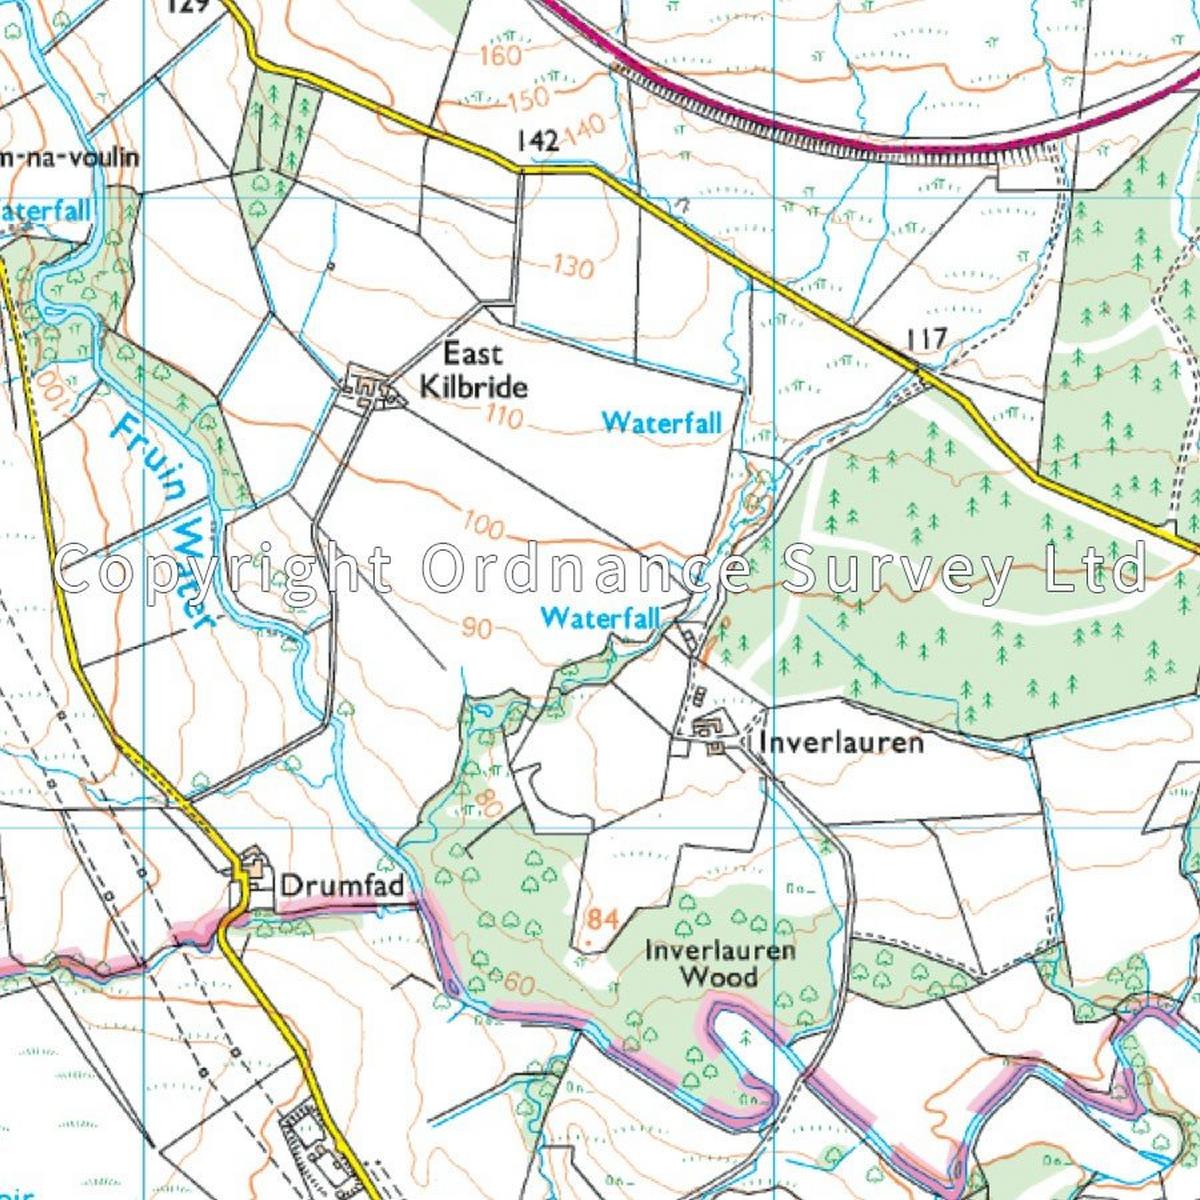 Ordnance Survey OS Explorer ACTIVE Map OL38 Loch Lomond